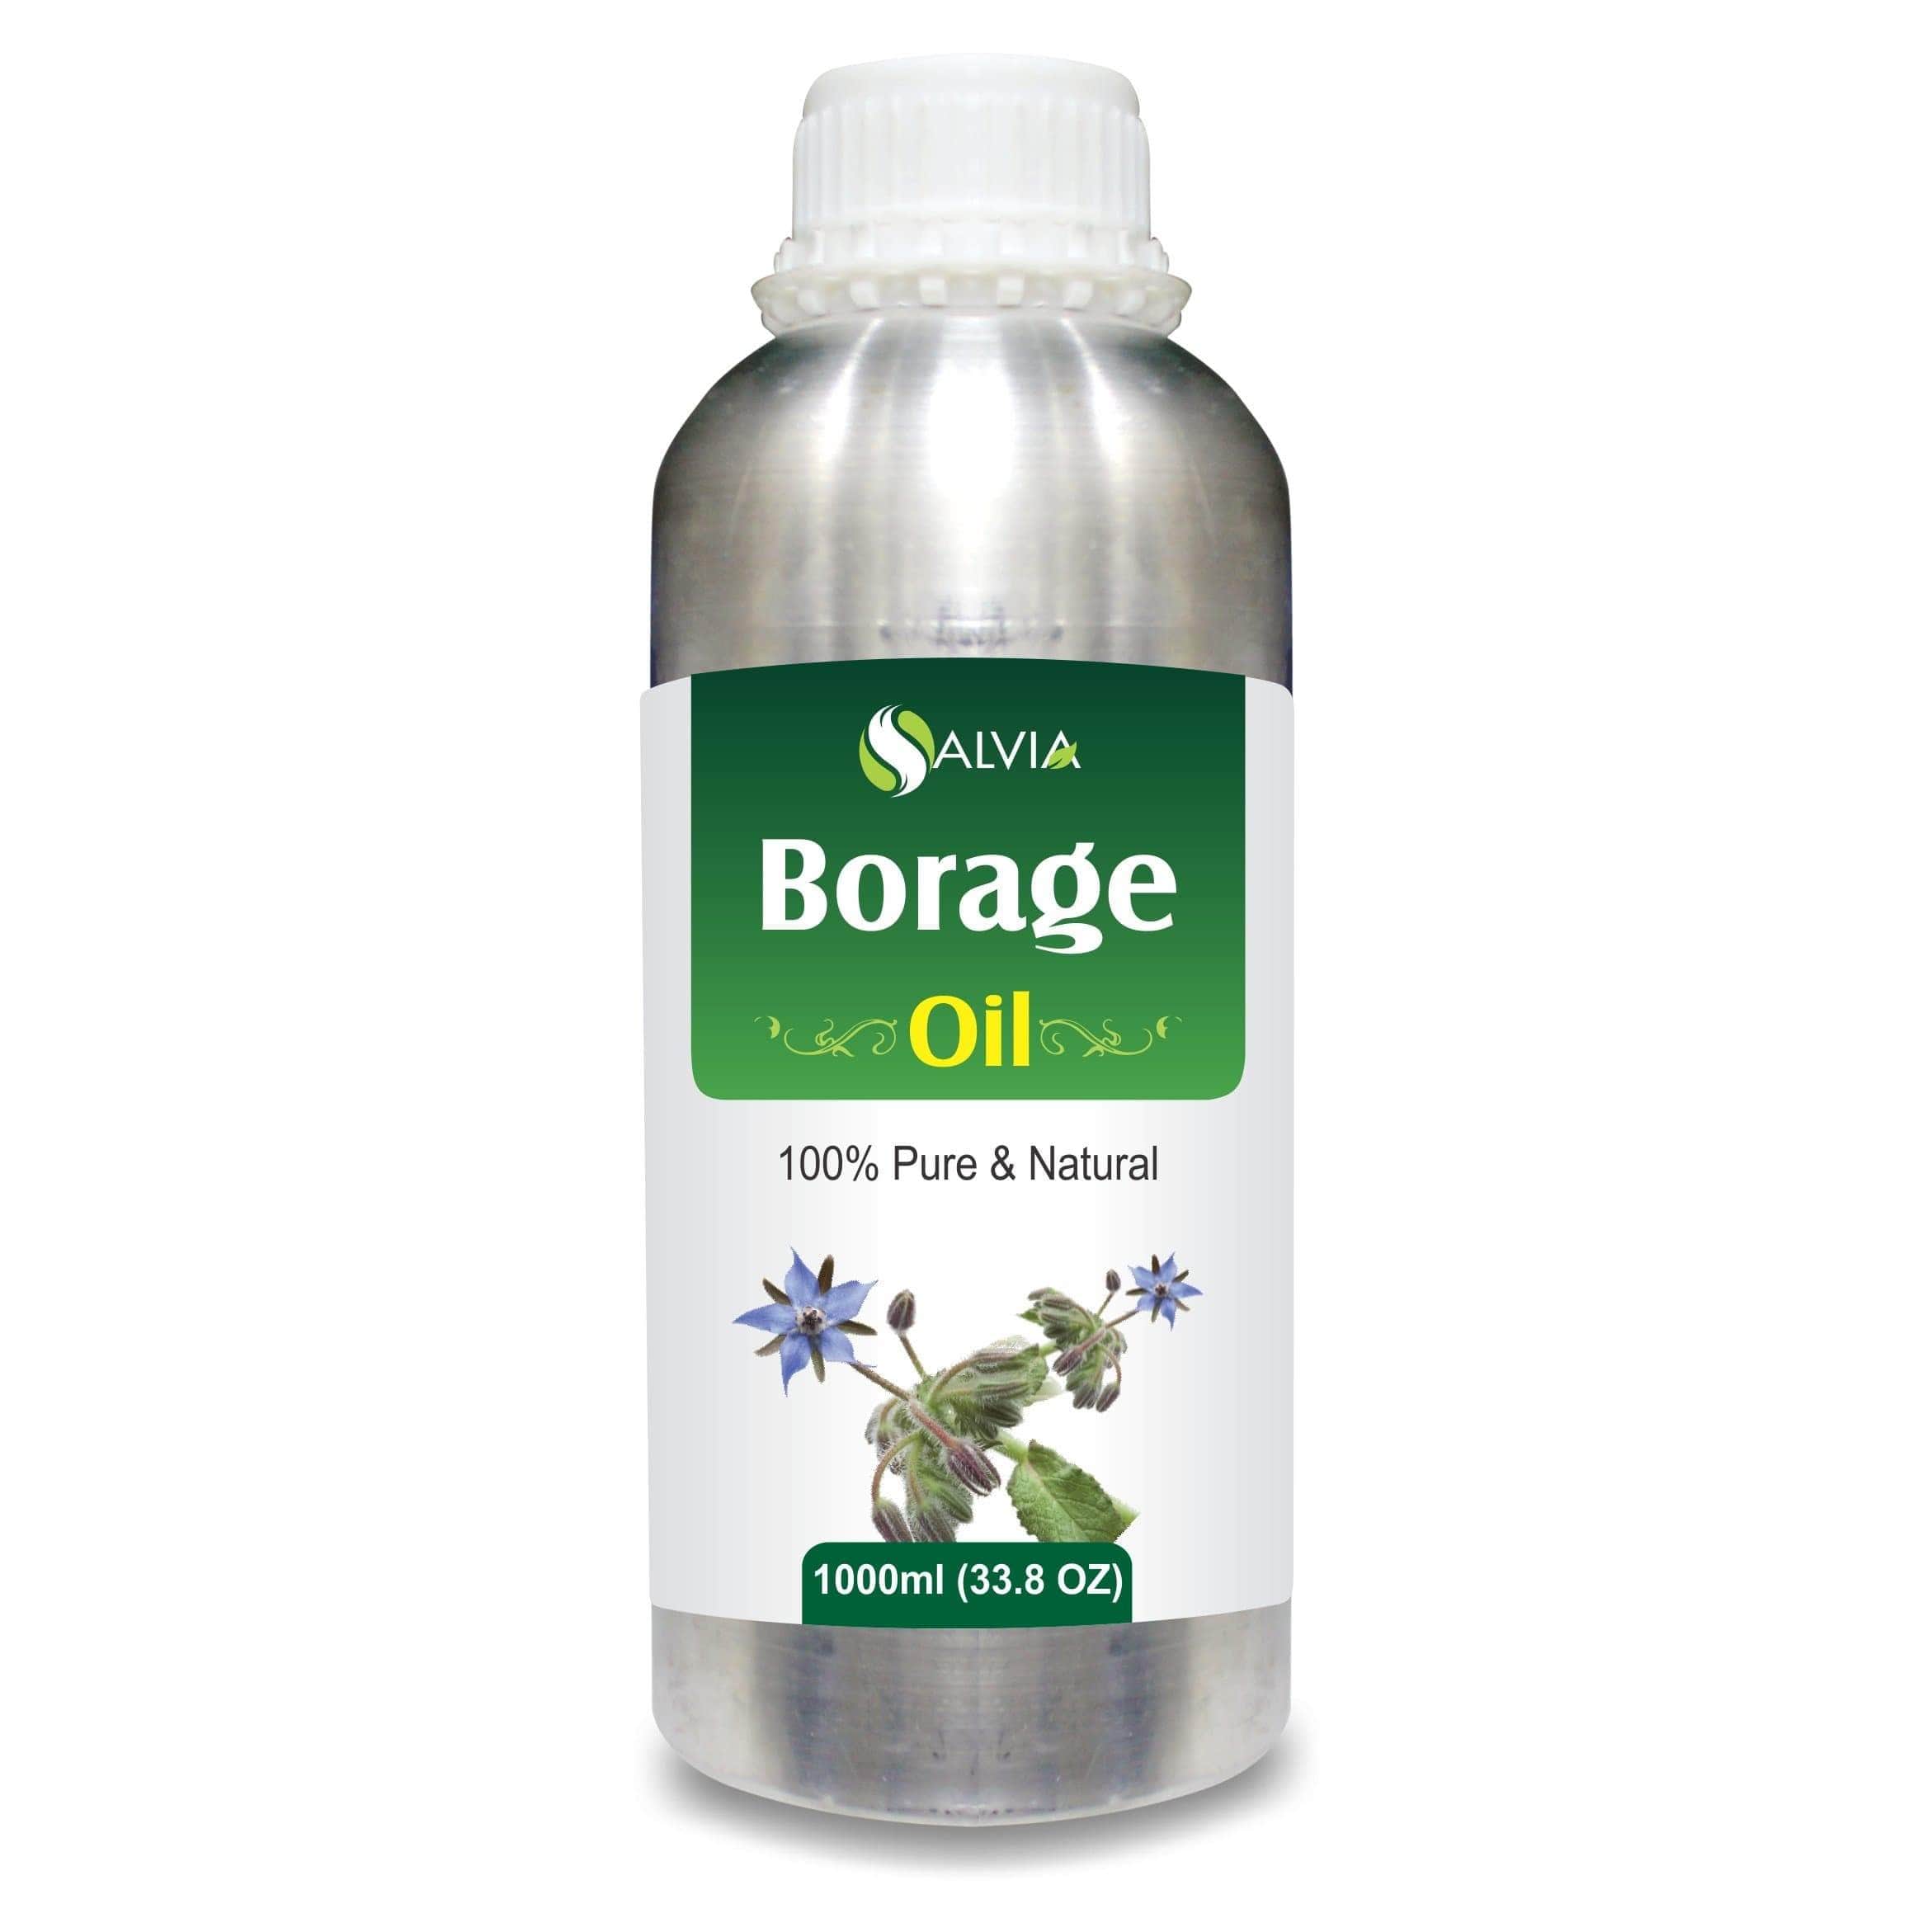 borage oil benefits for hair